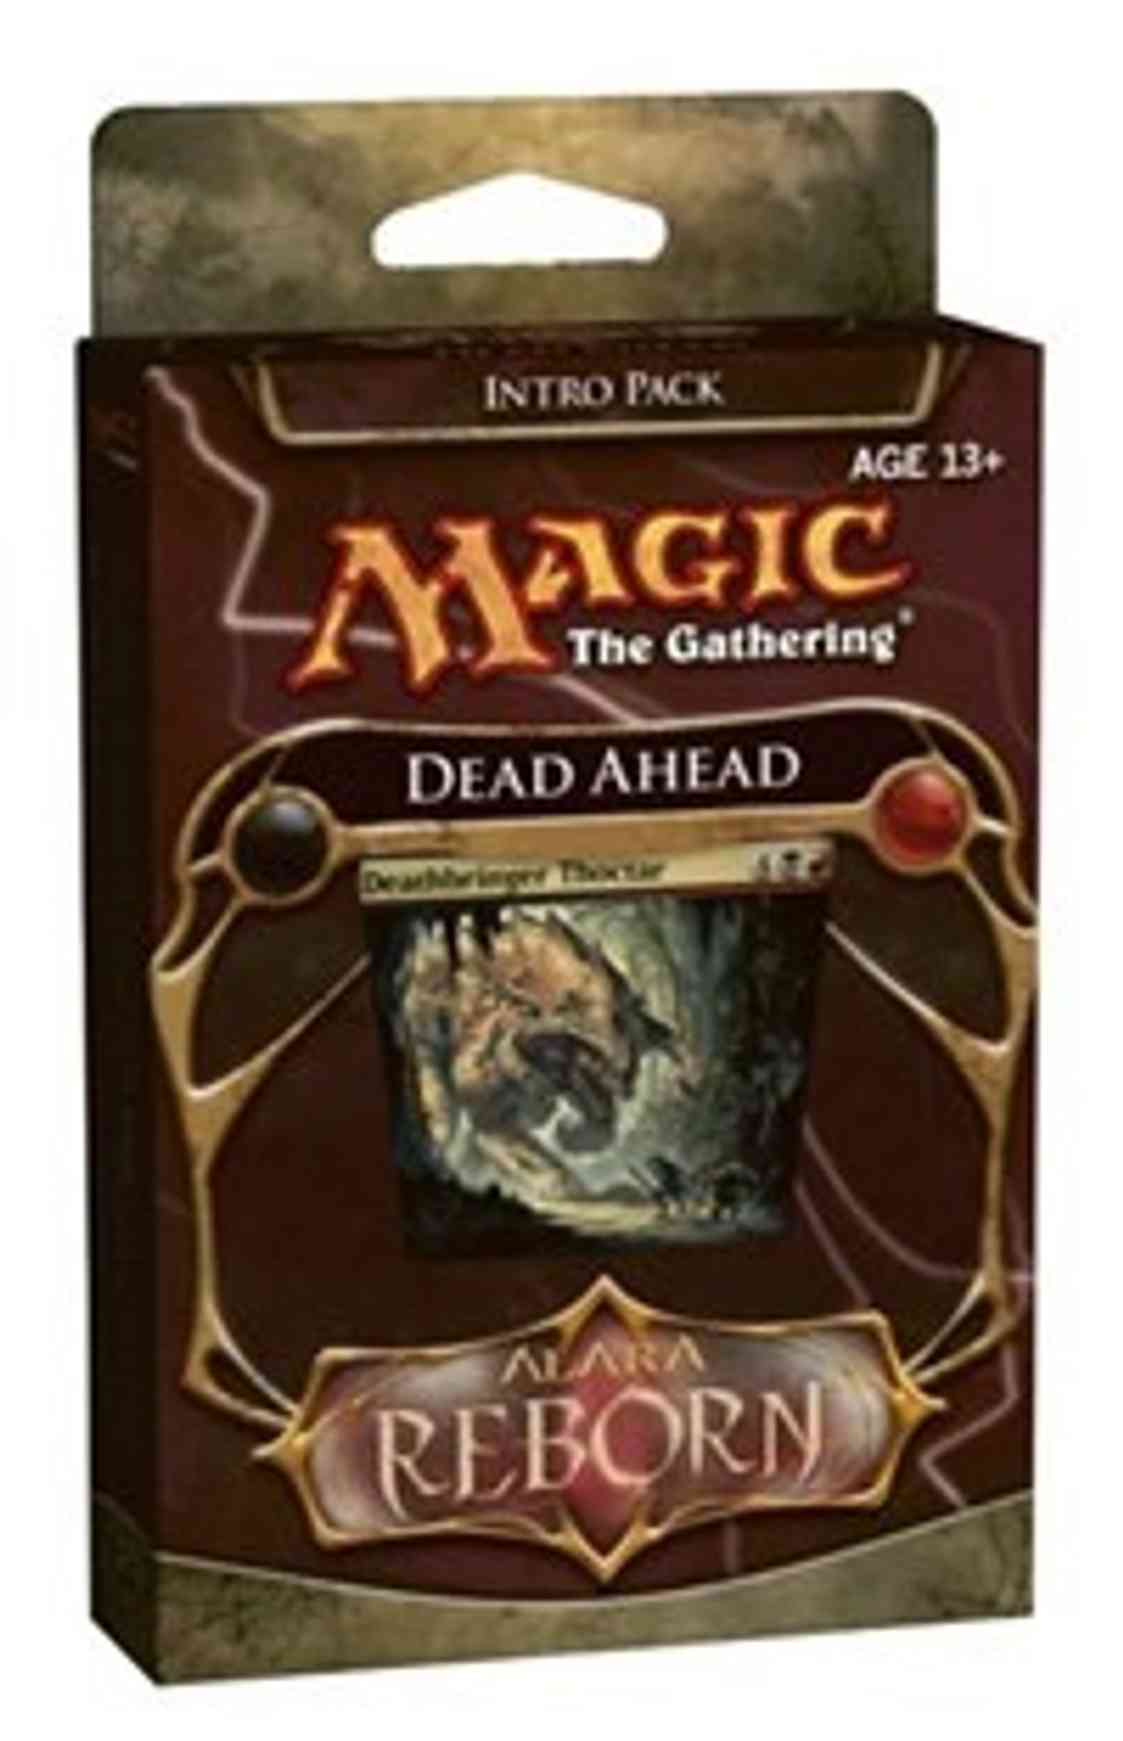 Alara Reborn Intro Pack - Dead Ahead magic card front